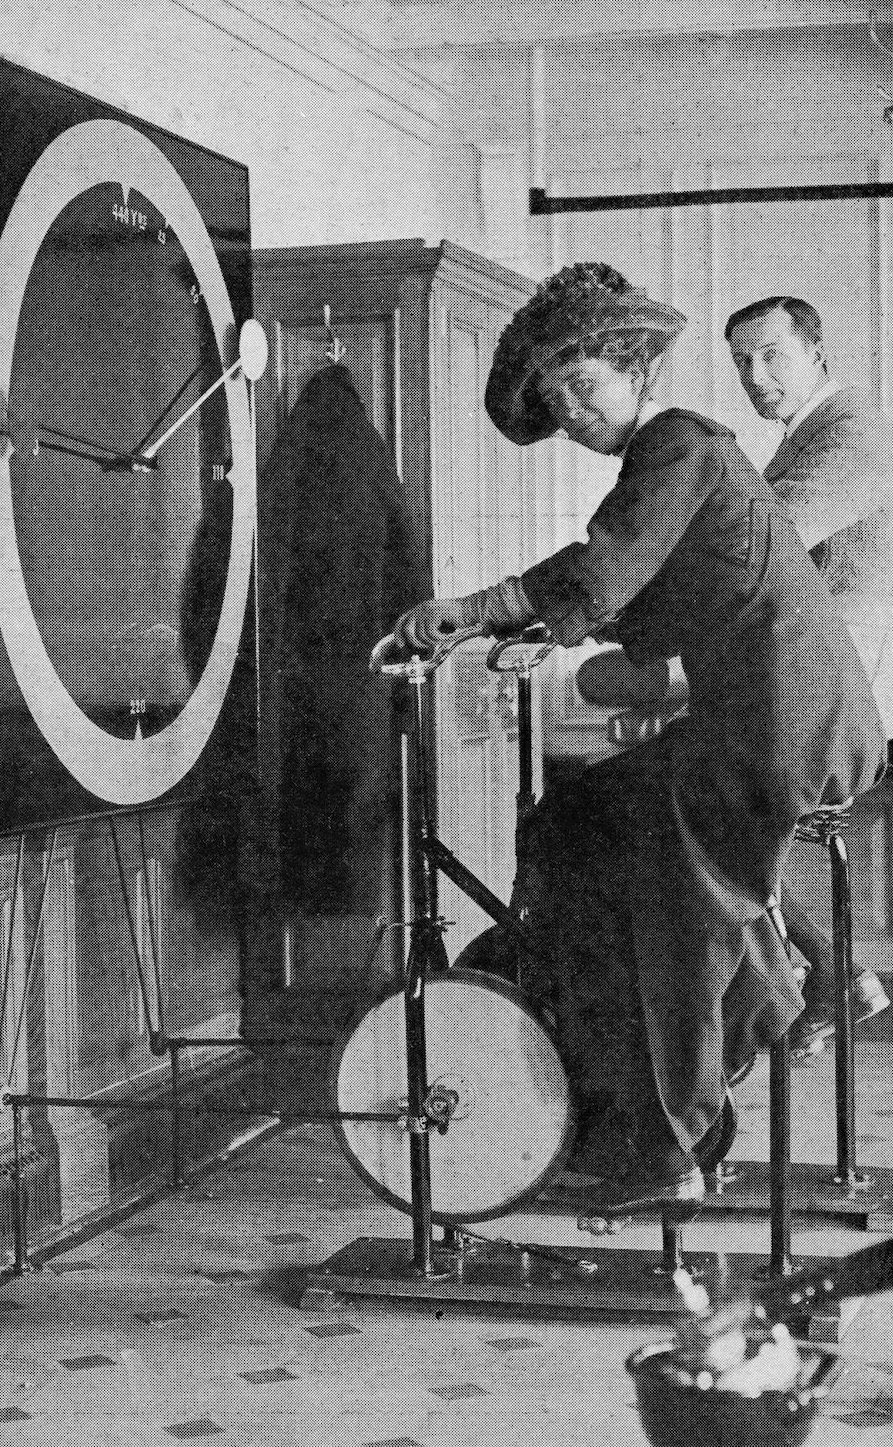 Passengers using "cycle racing machines" in the Titanic's gymnasium.1912